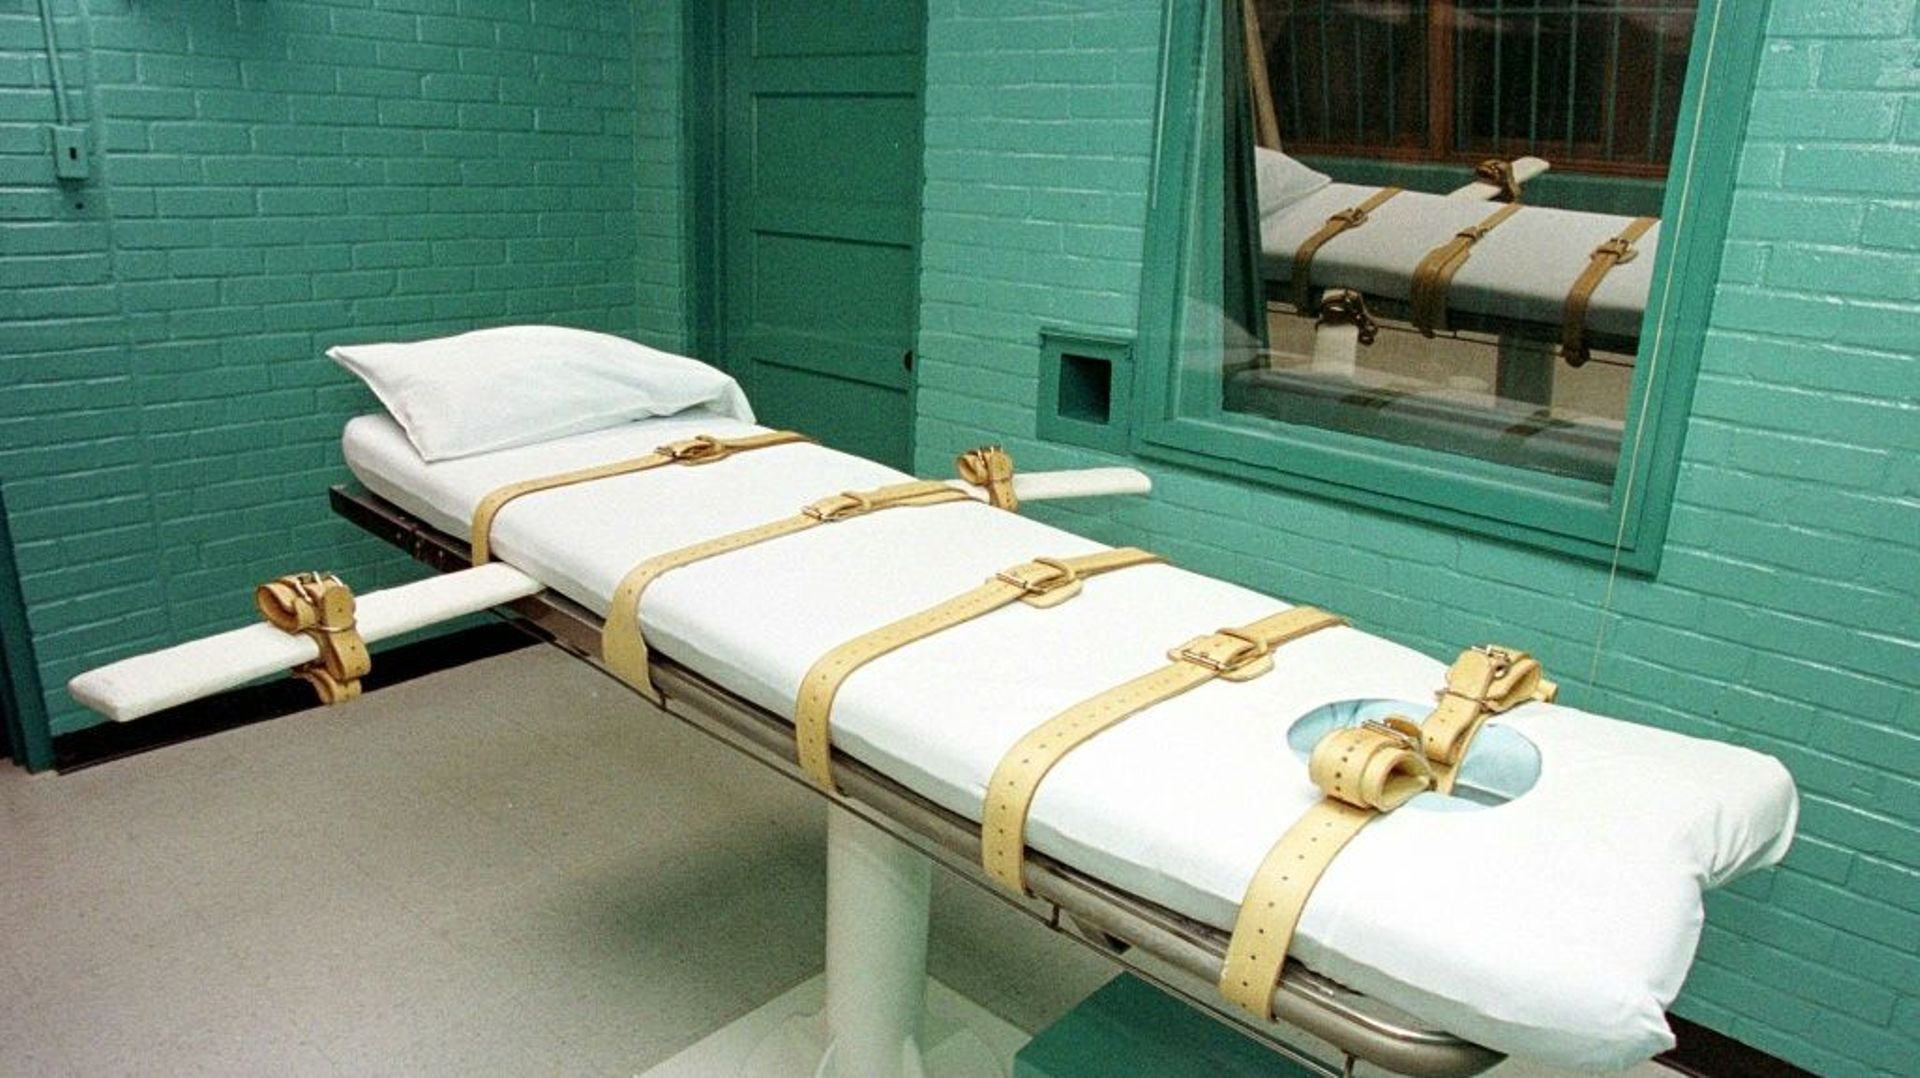 La chambre de la mort du pénitencier de Huntsville (Texas), en 2000